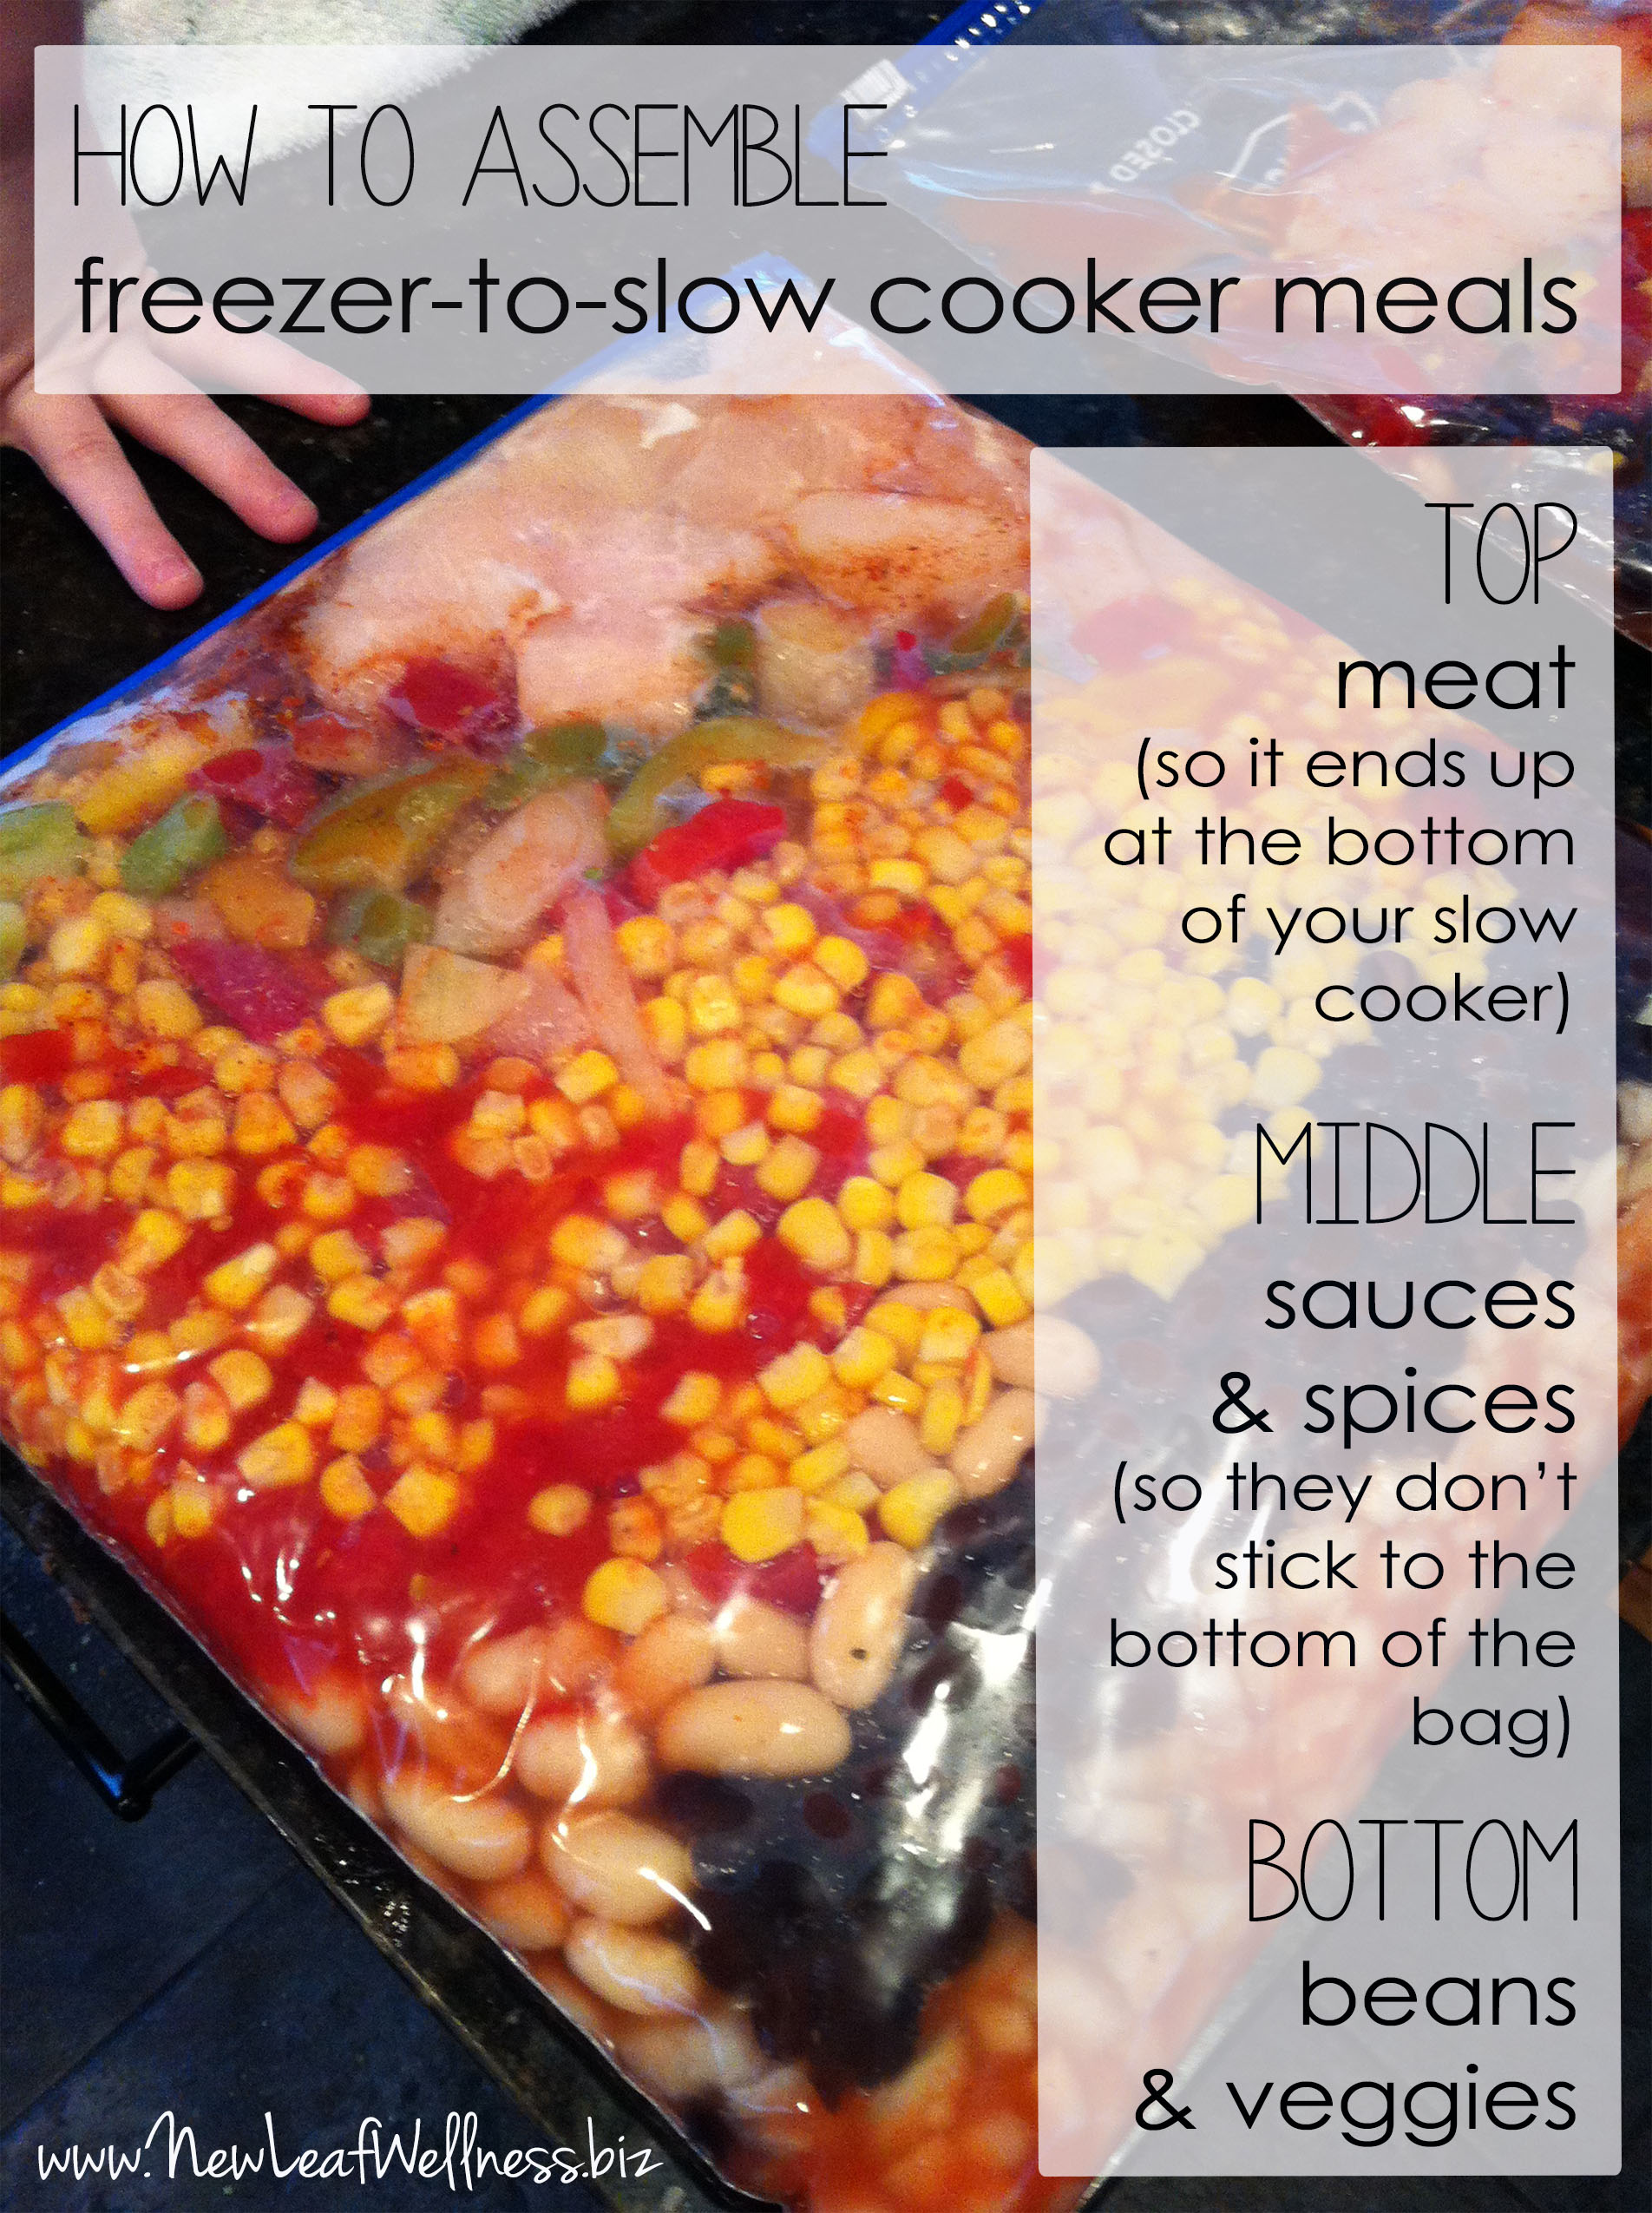 https://thefamilyfreezer.com/wp-content/uploads/2013/08/how-to-assemble-freezer-to-slow-cooker-meals.jpg